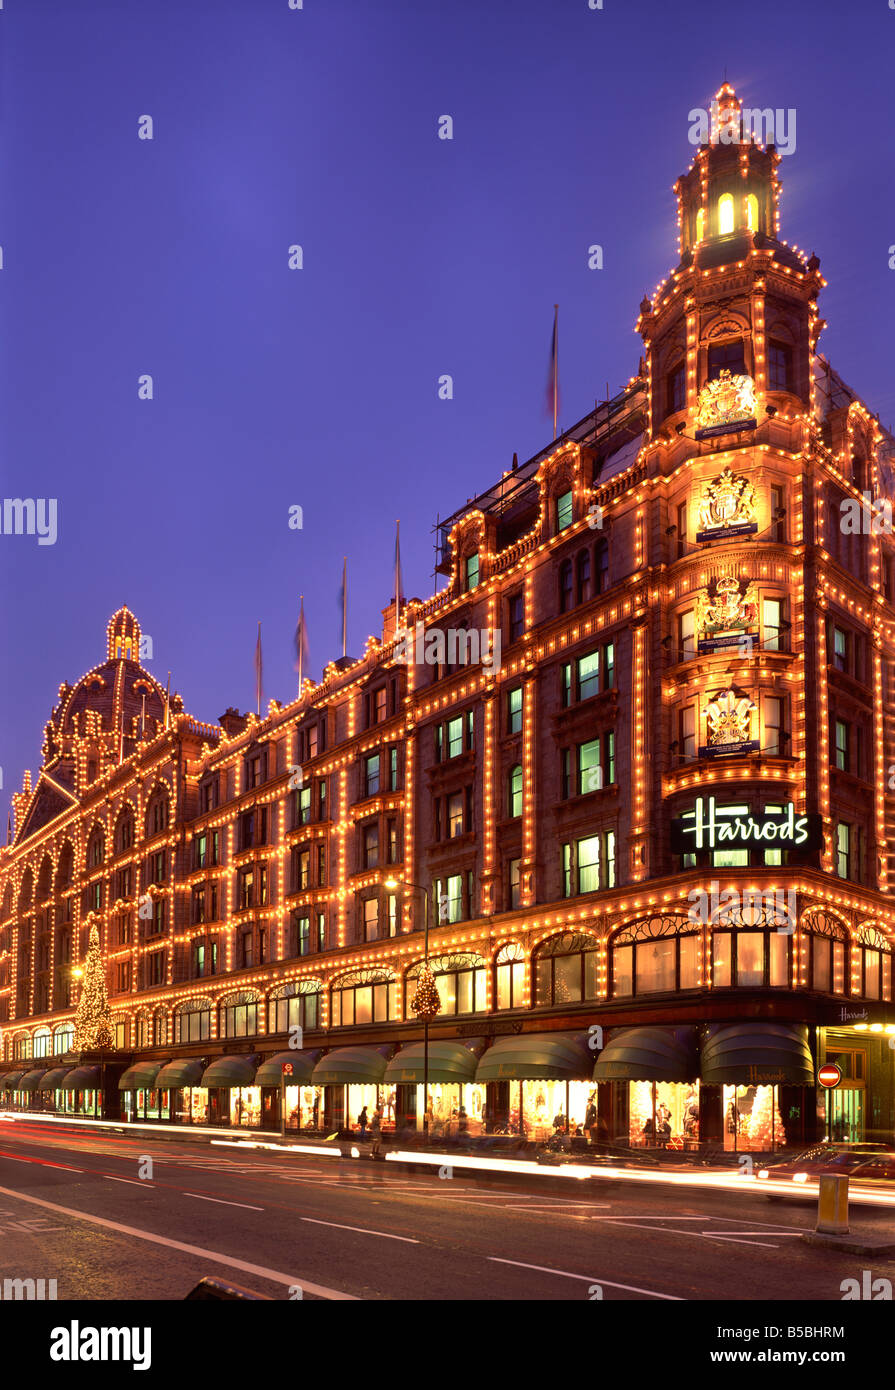 Harrods Department store illuminated at night Knightsbridge London England United Kingdom Europe Stock Photo